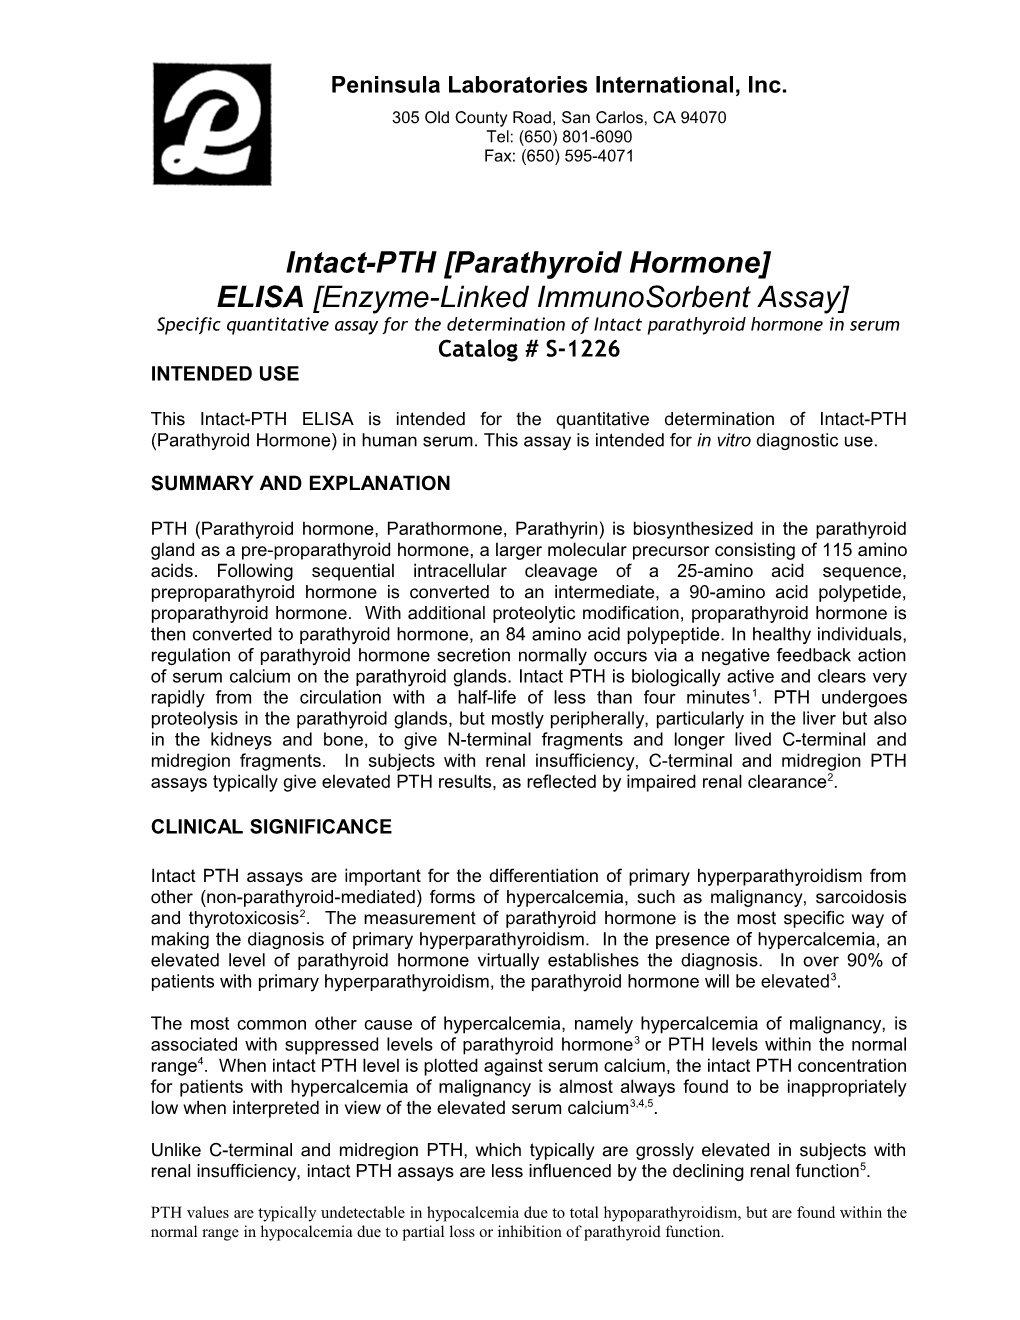 Intact-PTH Parathyroid Hormone